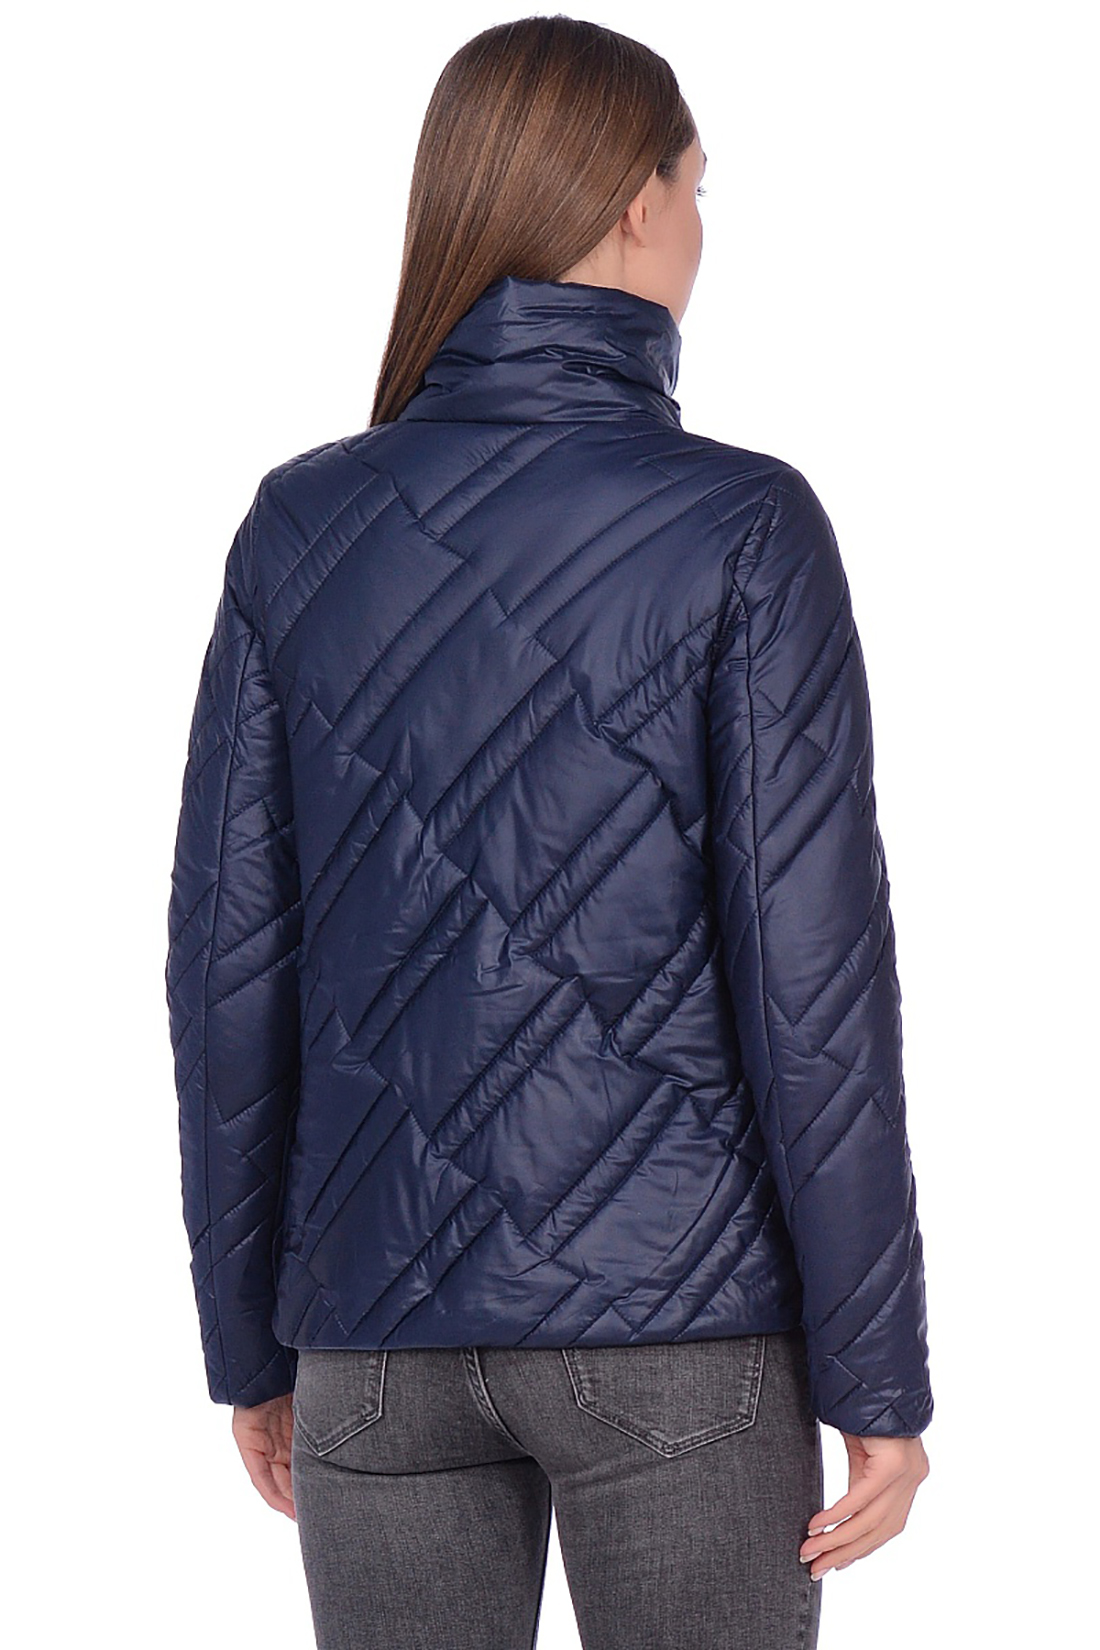 Укороченная куртка с простёжкой (арт. baon B039502), размер M, цвет синий Укороченная куртка с простёжкой (арт. baon B039502) - фото 2